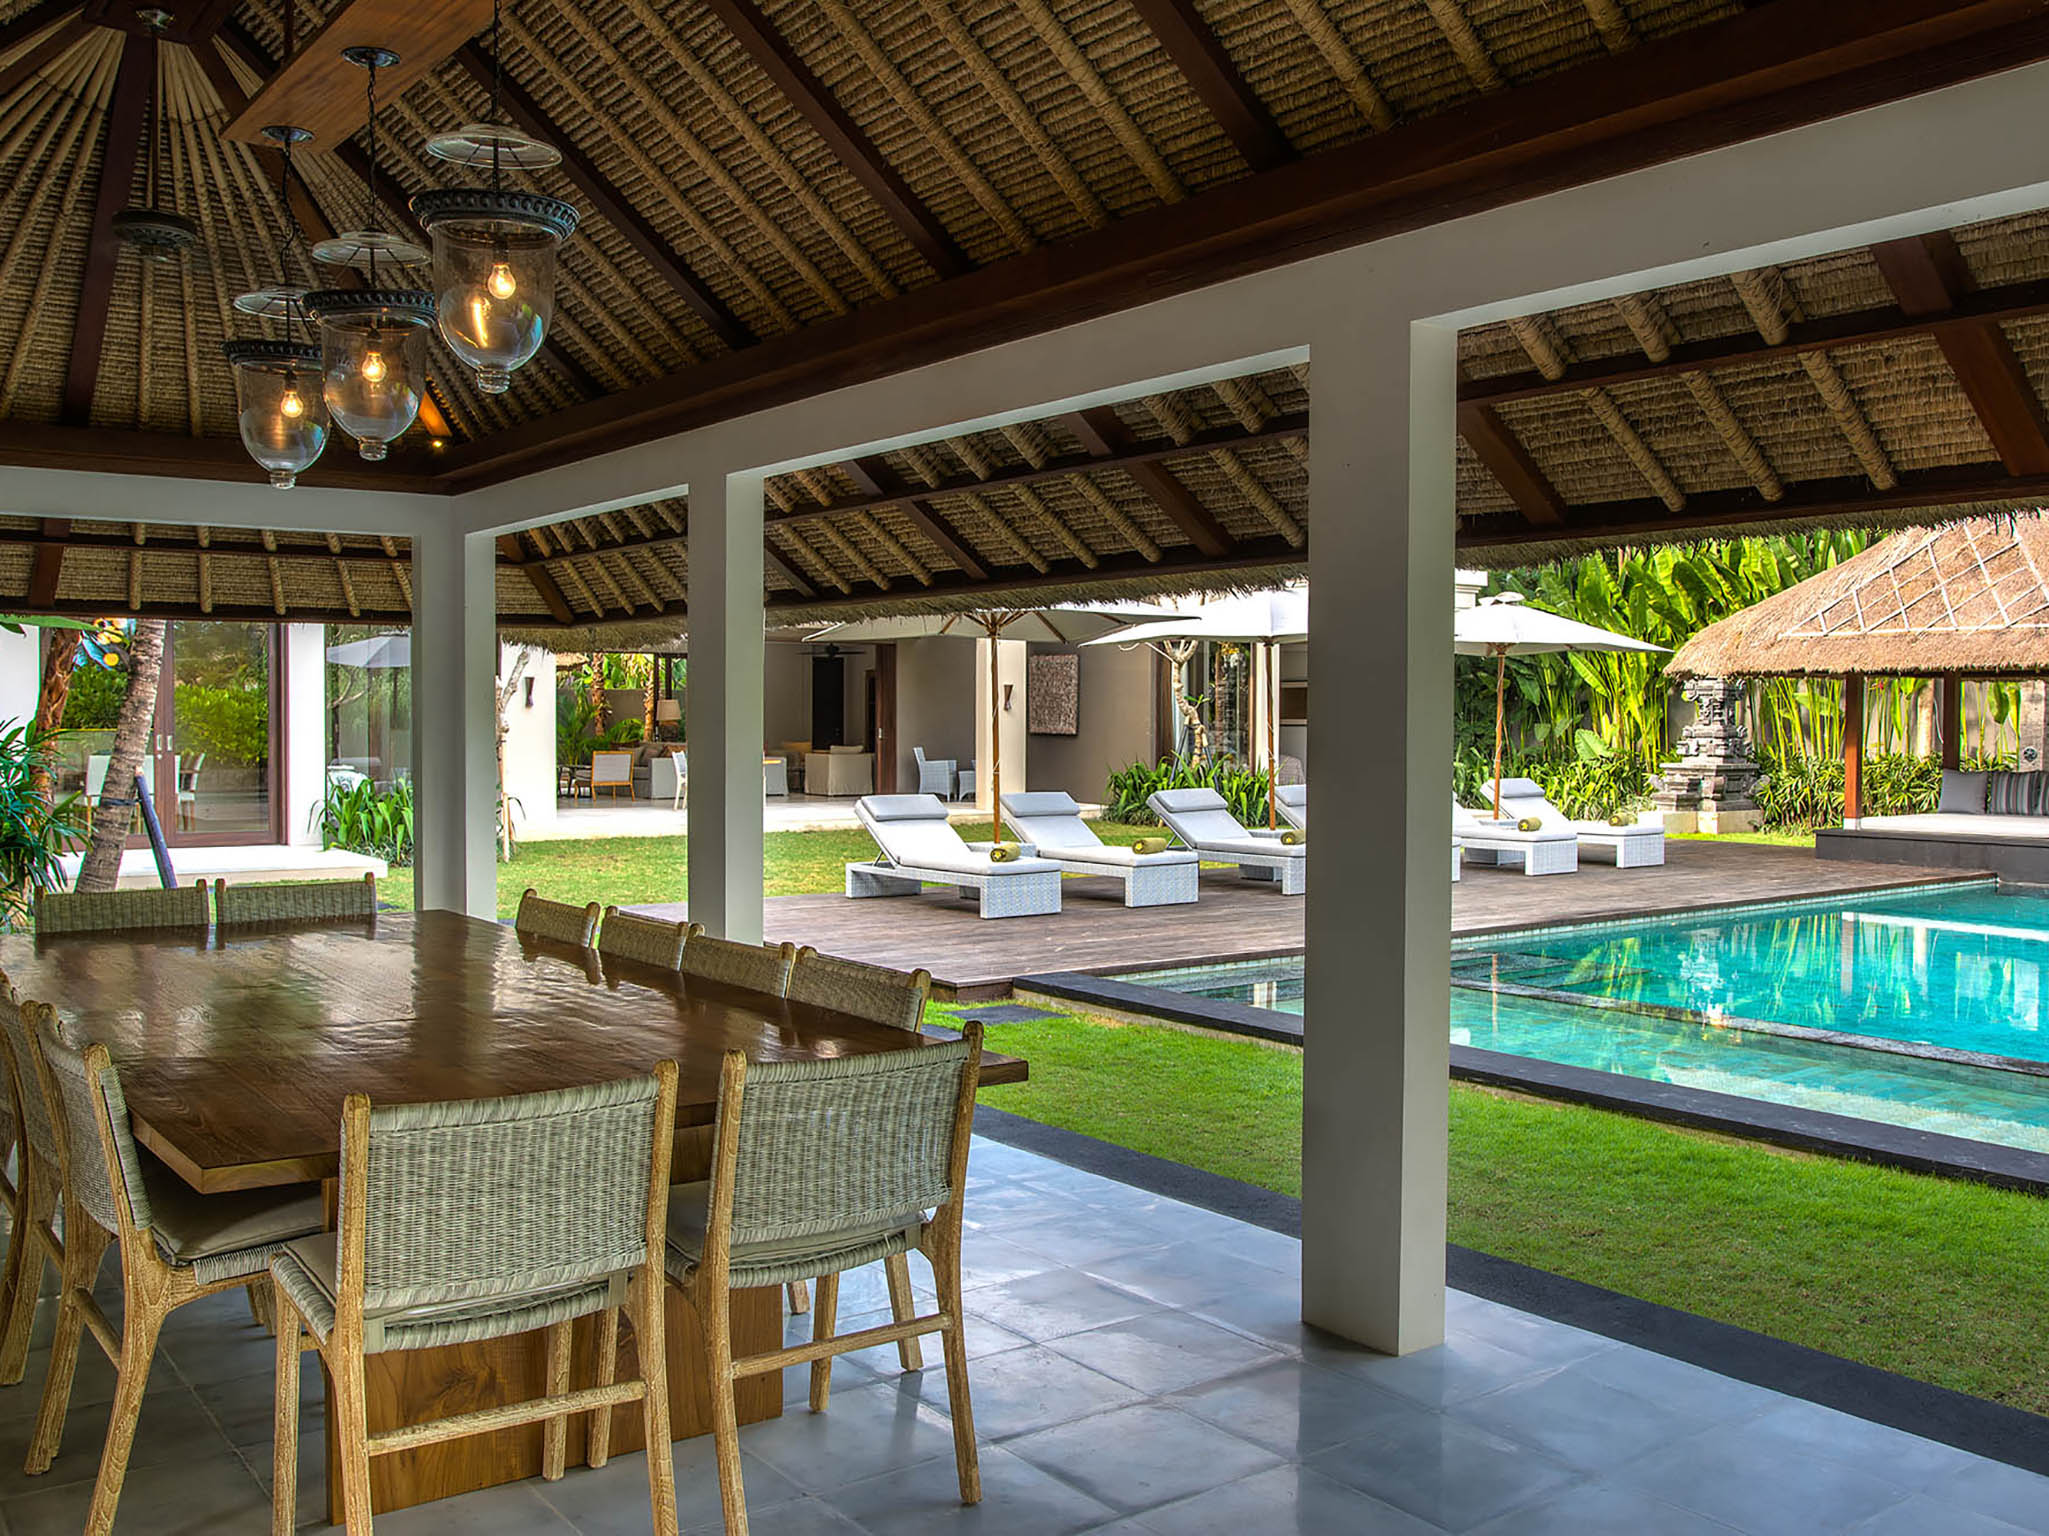 Seseh Beach Villa II - Outdoor living spaces - Seseh Beach Villa II, Seseh-Tanah Lot, Bali